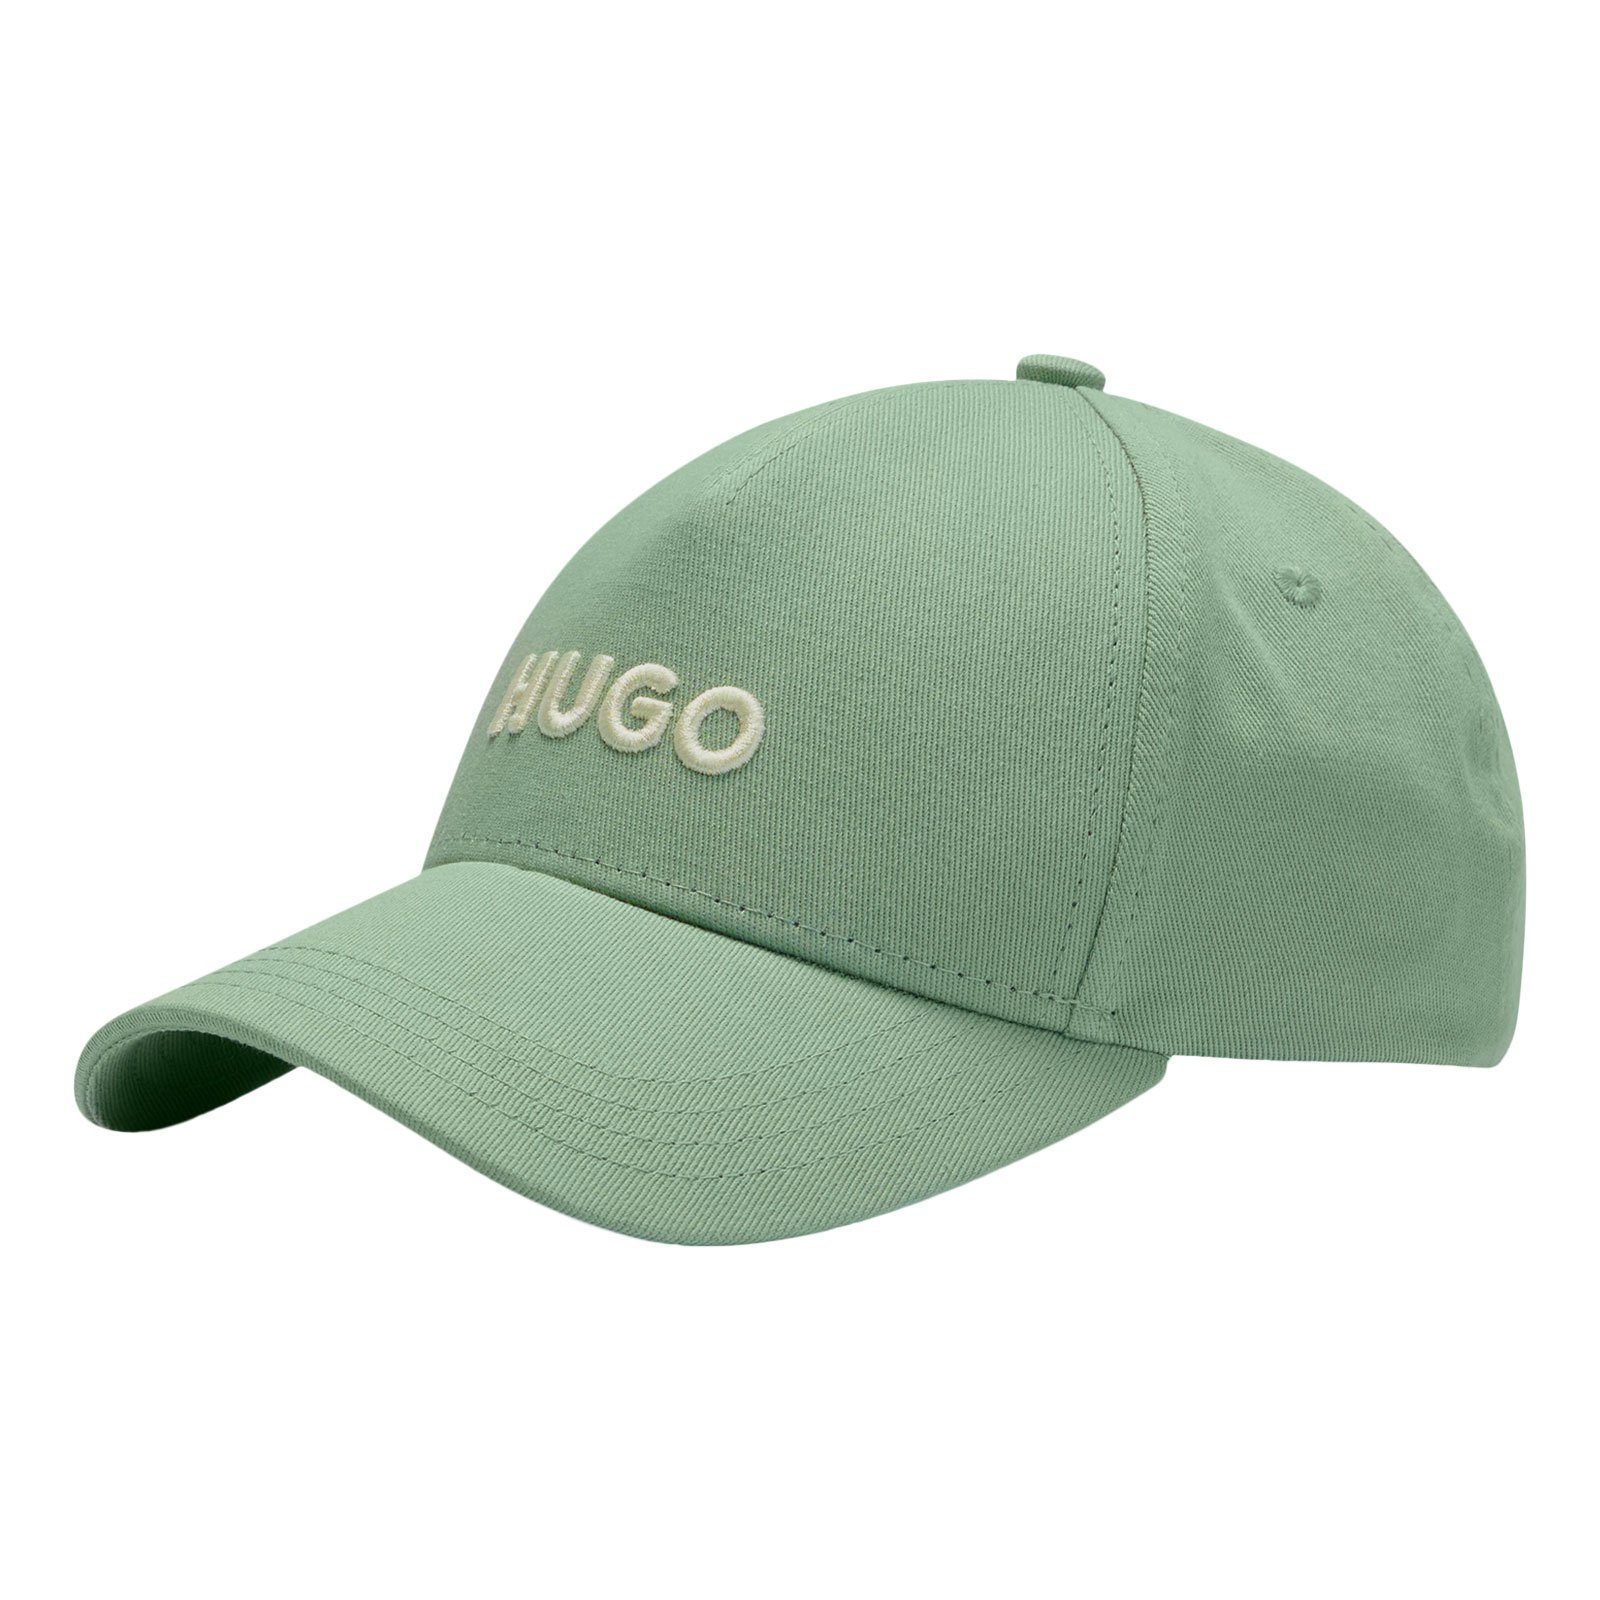 Snapback 330 Cap gesticktem Basecap pastel green mit HUGO Markenlogo light